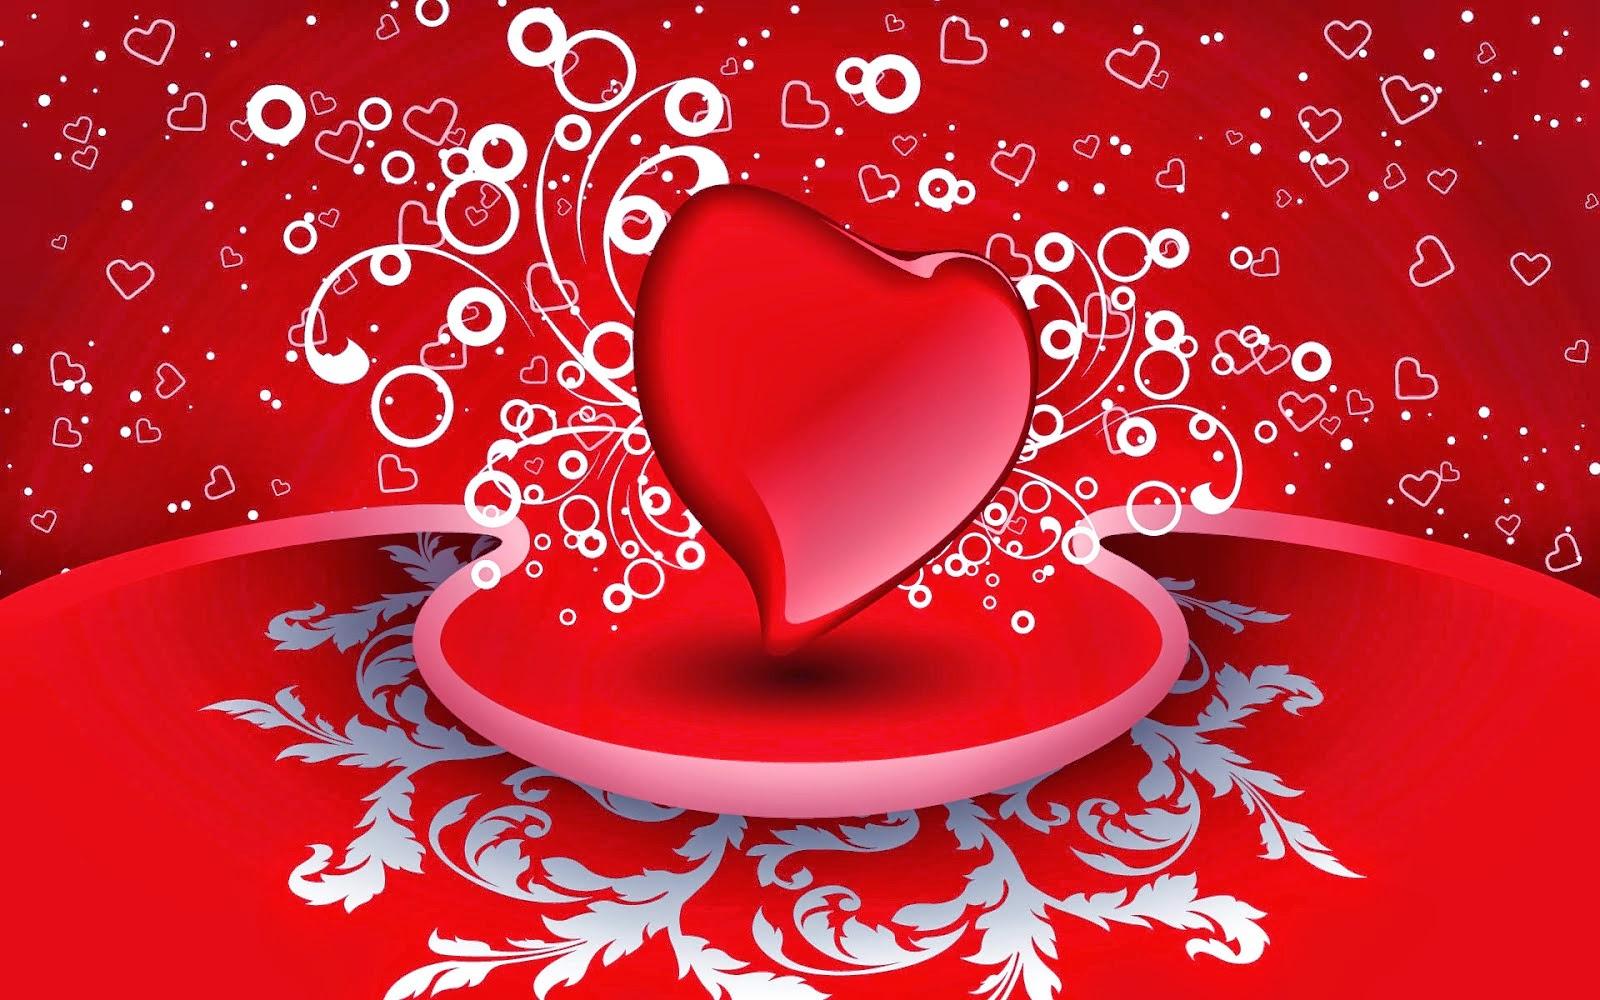 Happy Valentines Day Wallpaper 2015: Valentine's Day Image SMS